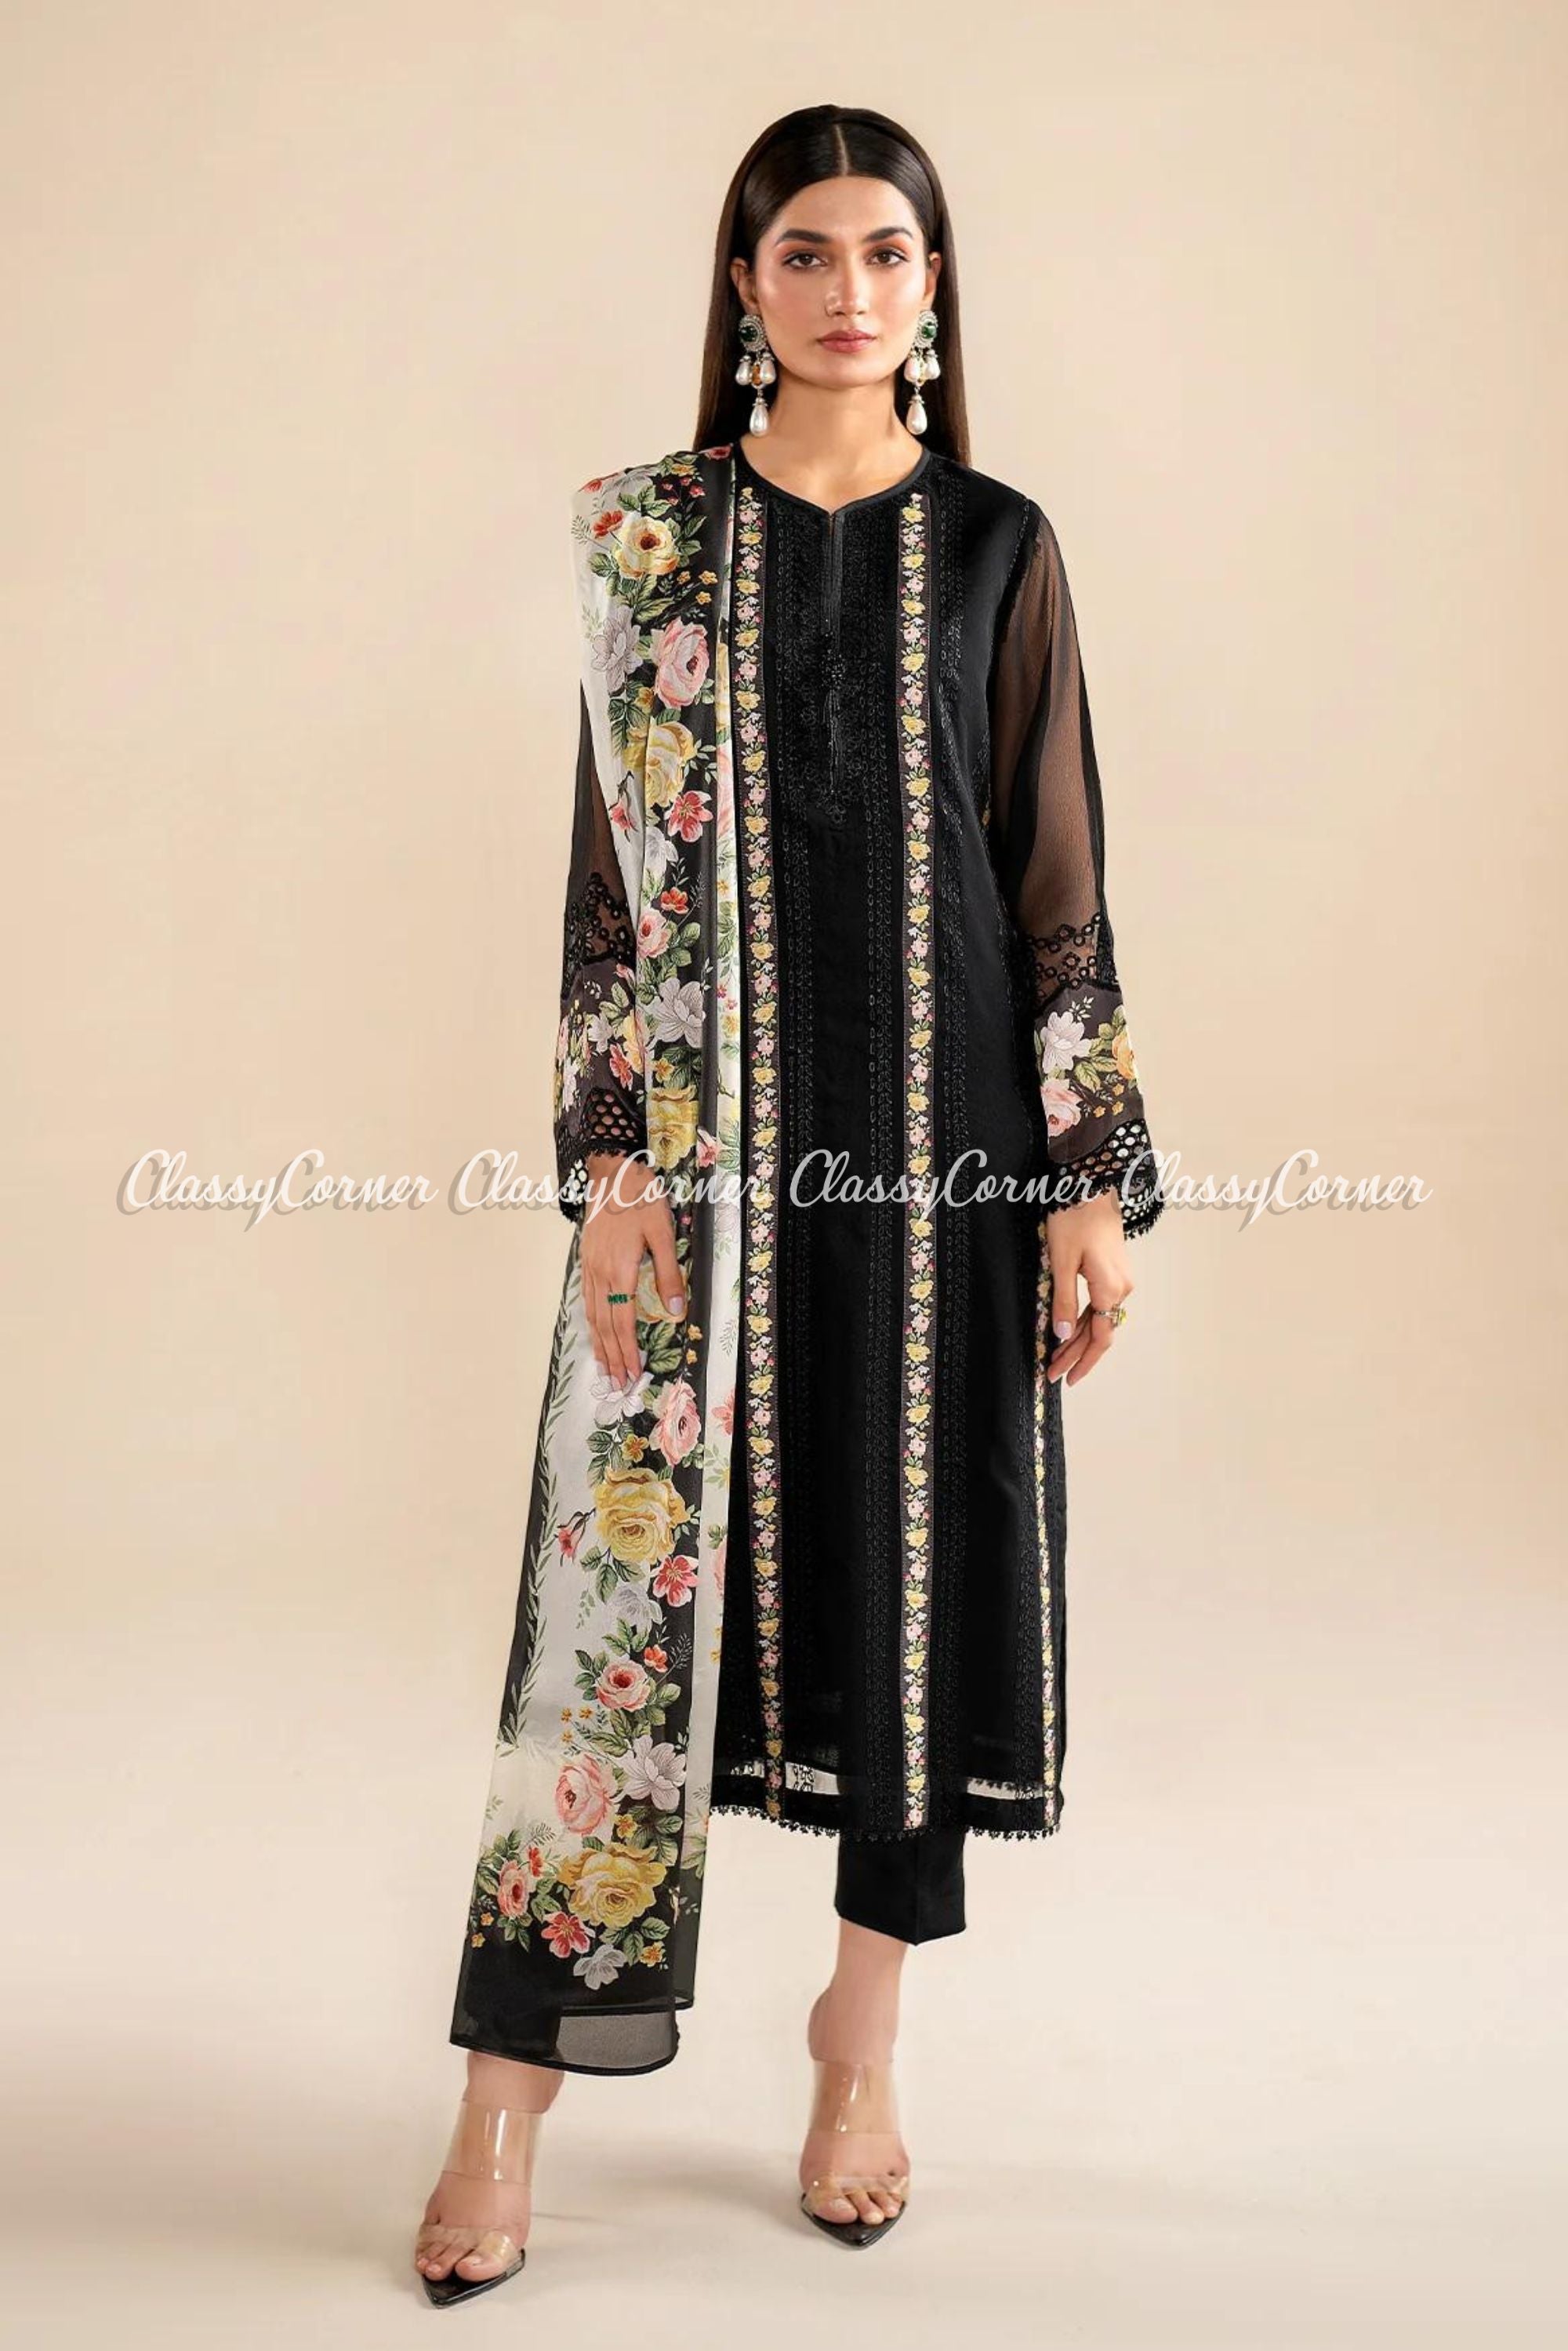 women's dress for pakistani wedding